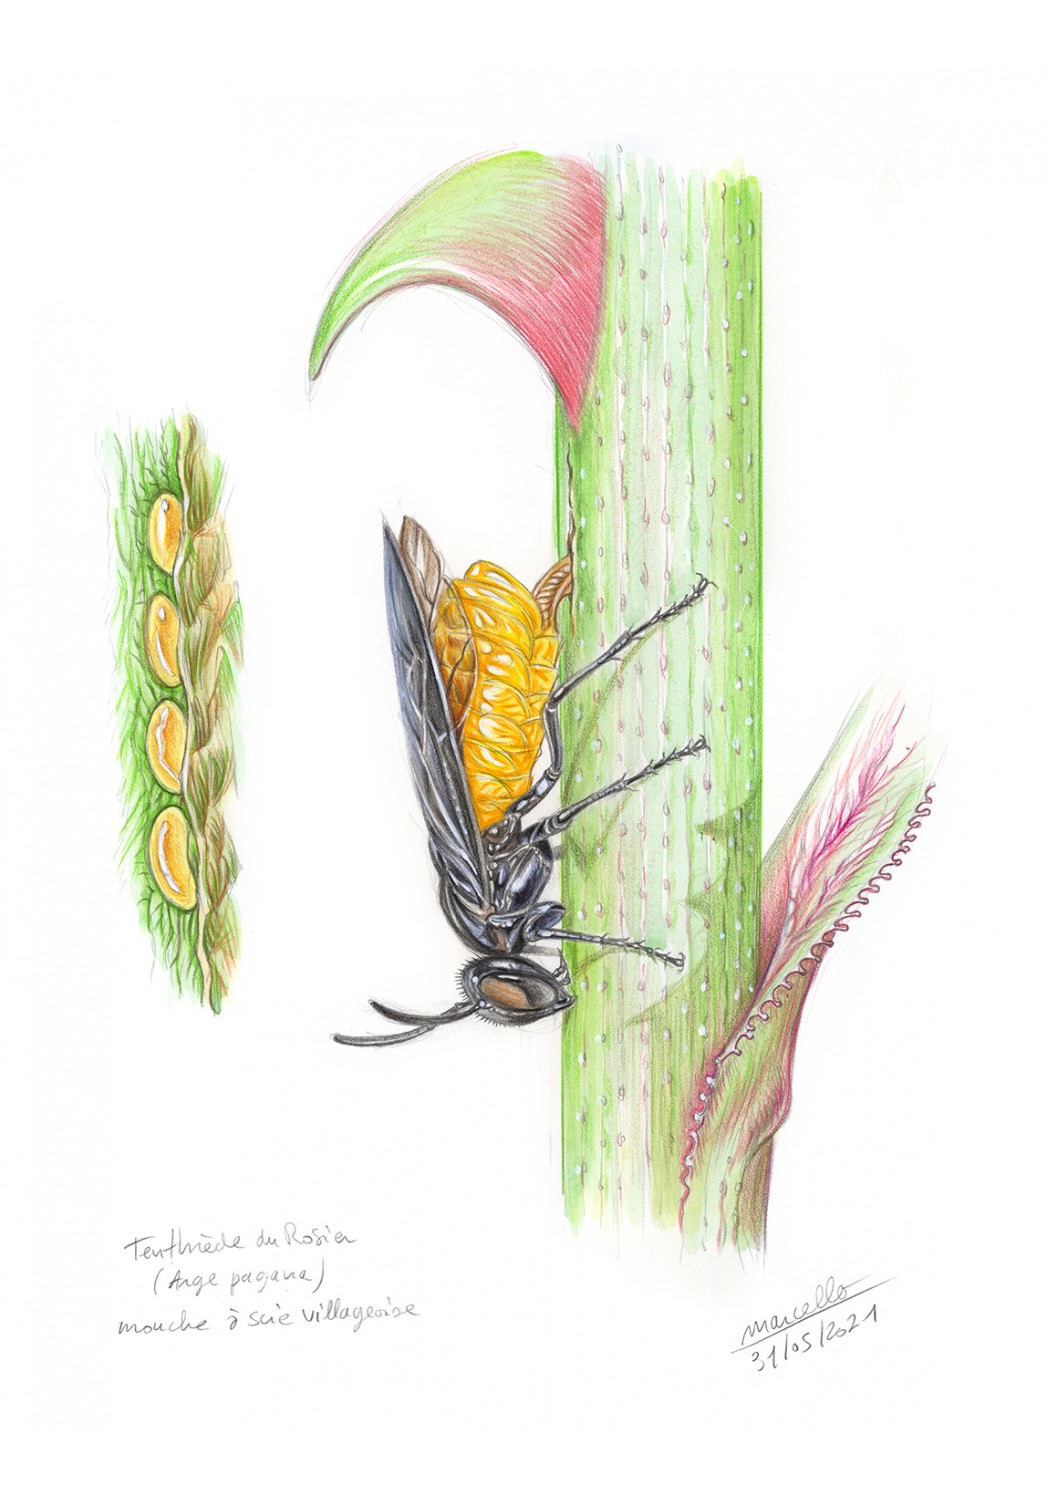 Marcello-art: Entomology 427 - Rose Moth (Arge pagana)